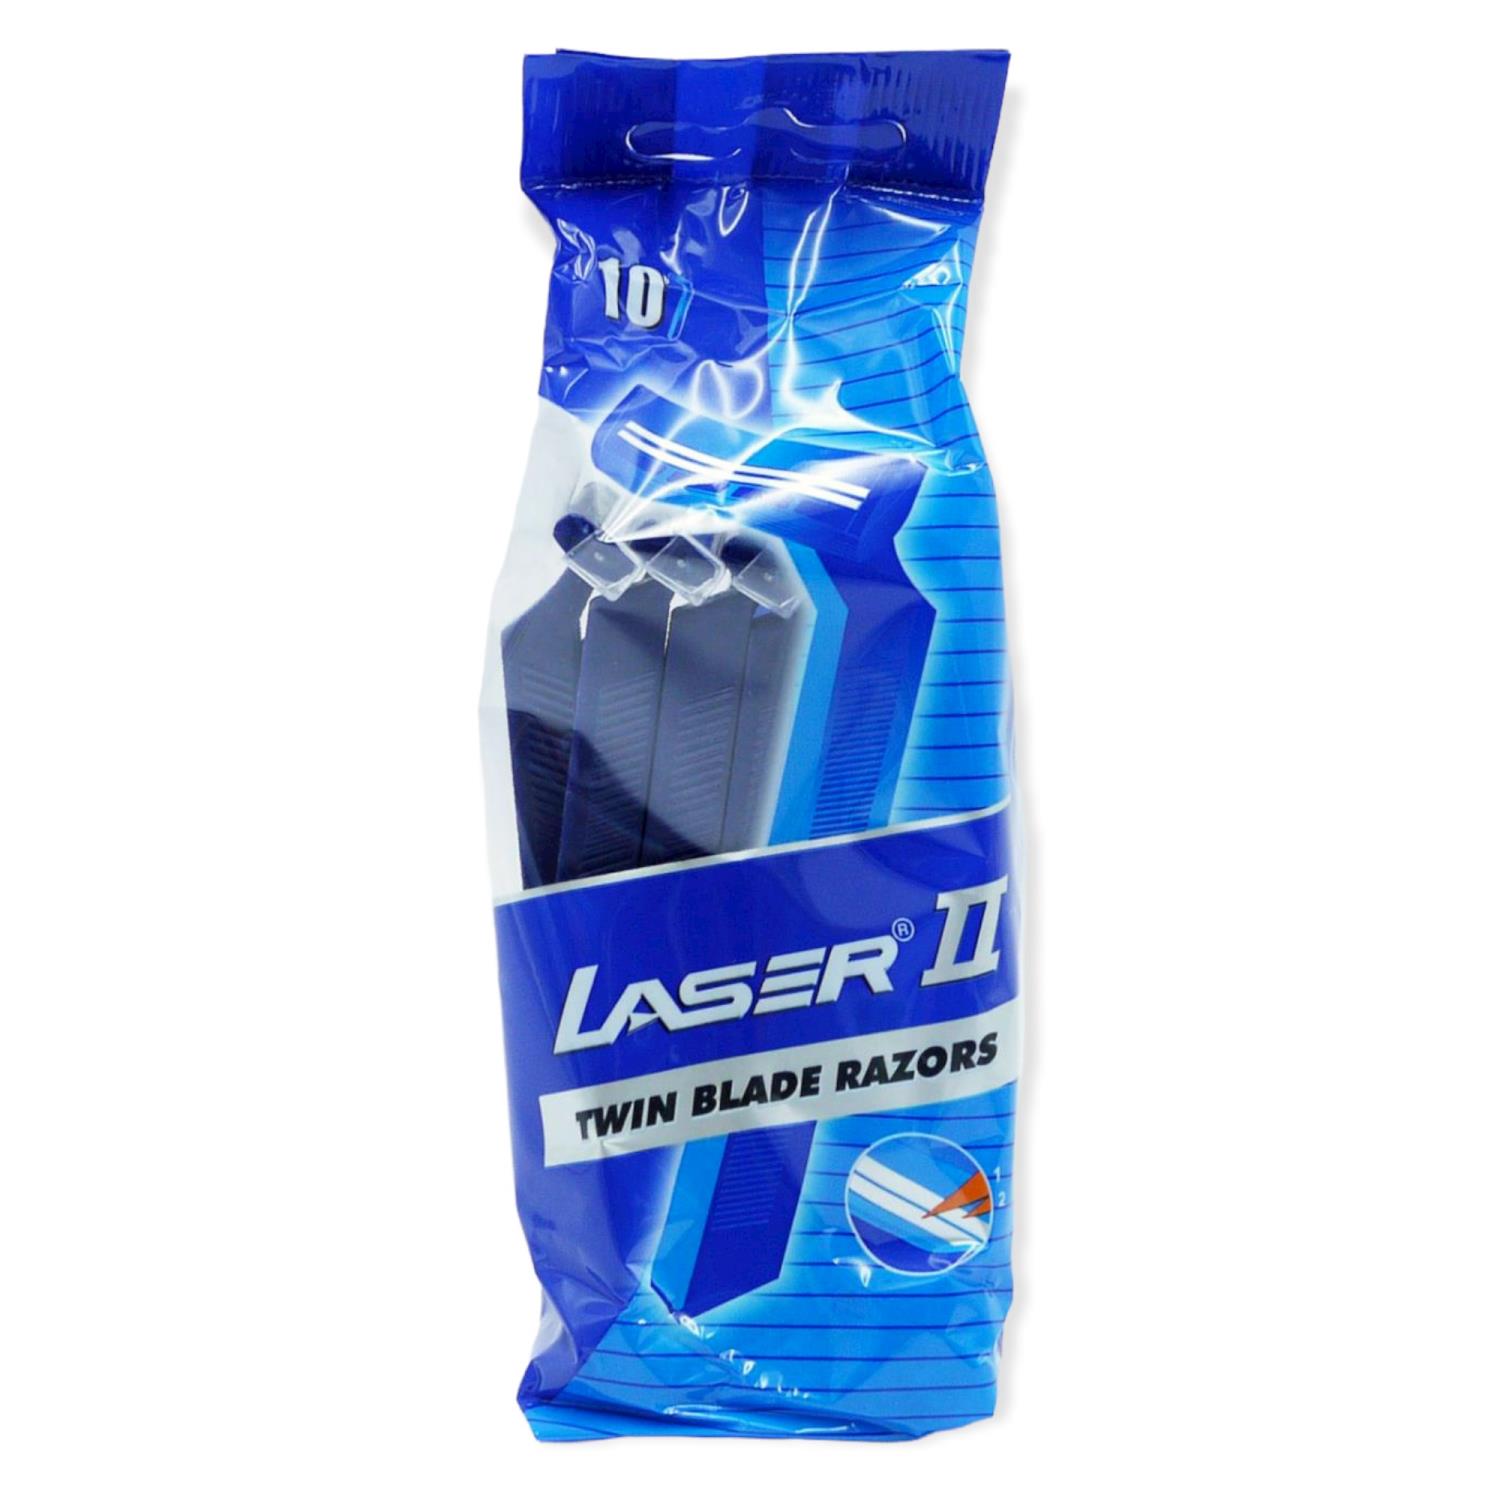 LaserII Twin Blade Razors 10pk